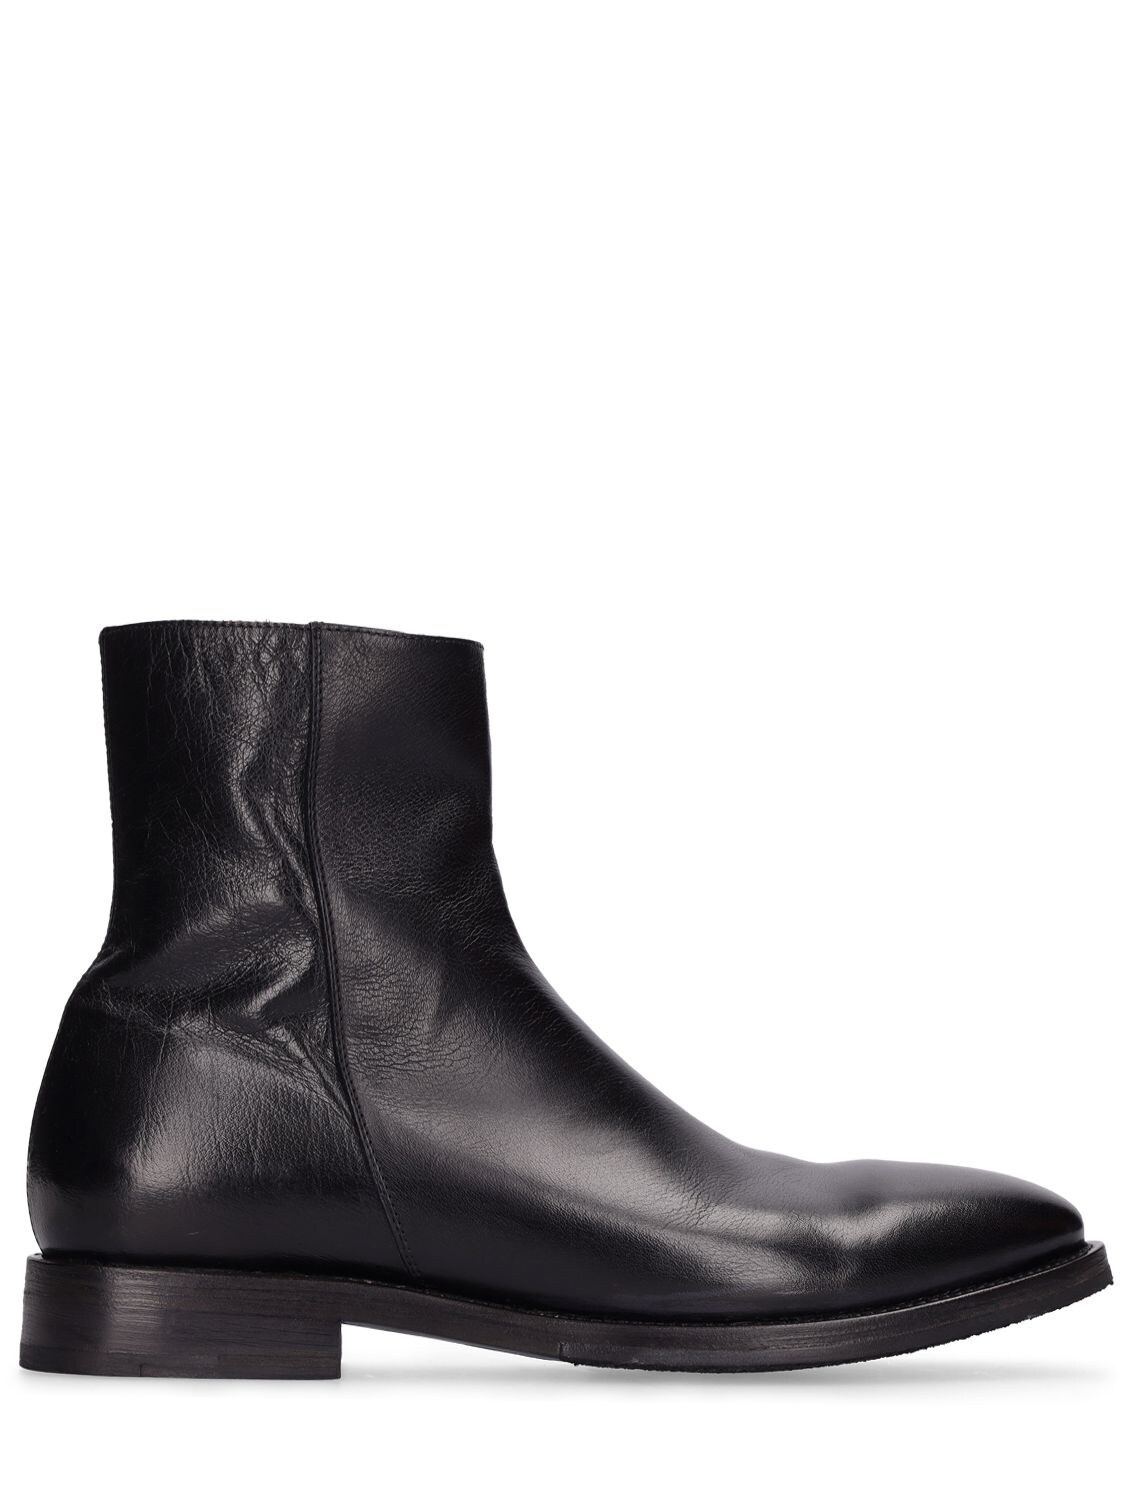 Alberto Fasciani Leather Ankle Boots W/ Zip In Black